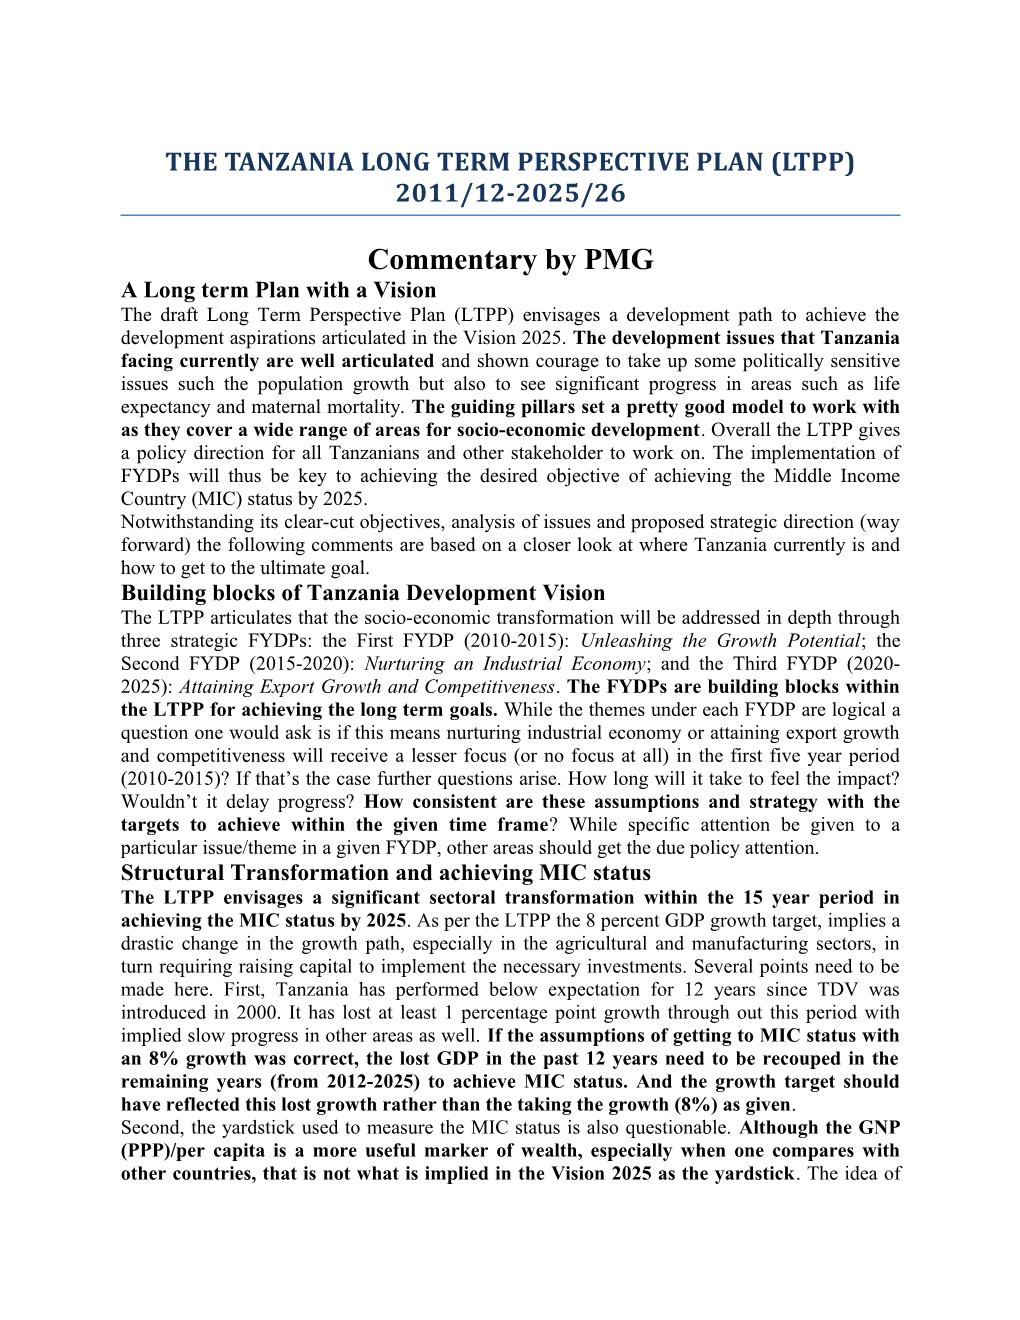 The Tanzania Long Term Perspective Plan (Ltpp) 2011/12-2025/26